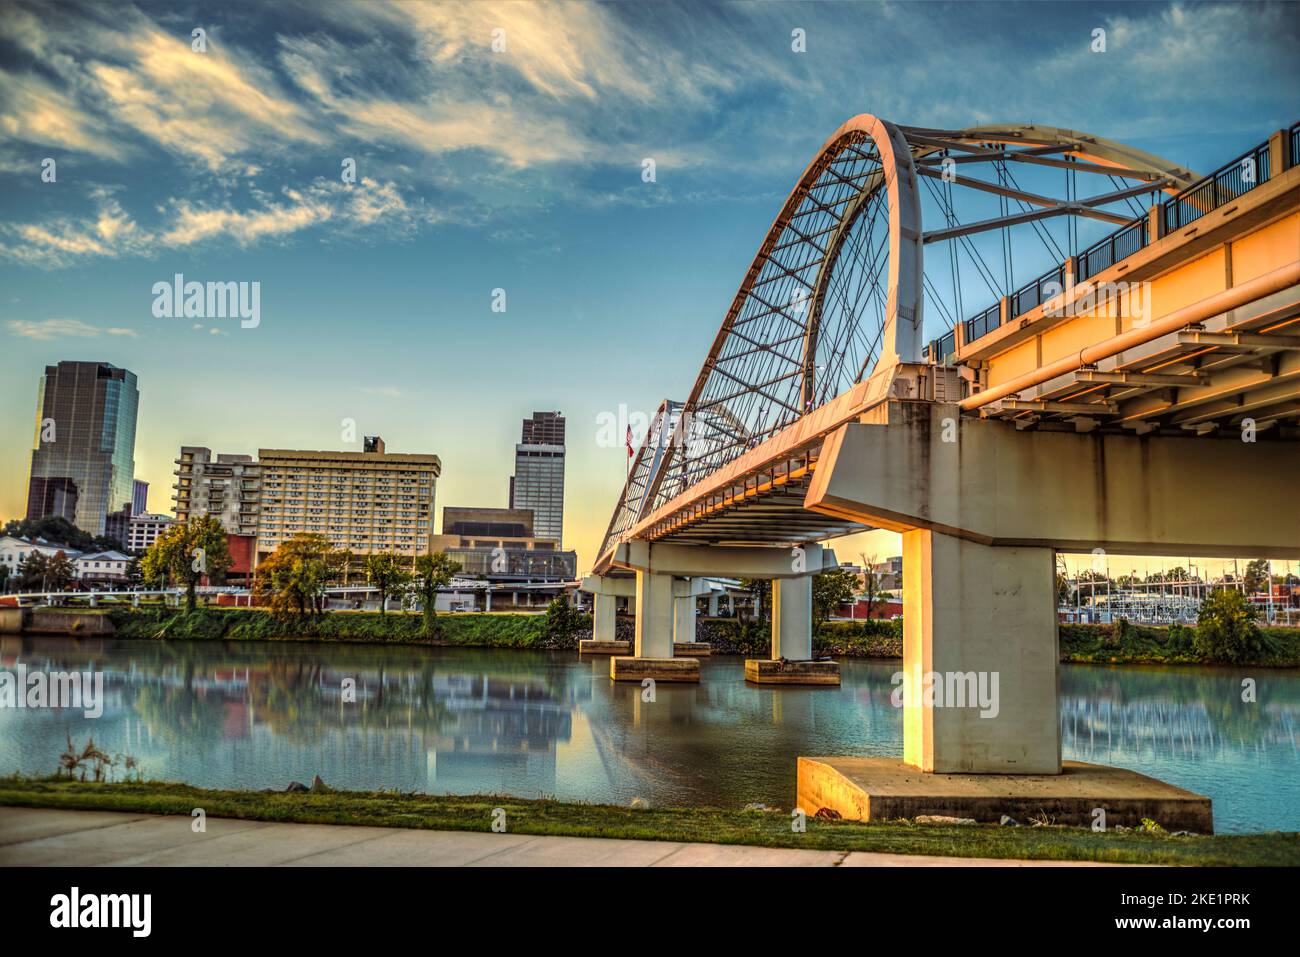 The Broadway Street Bridge spanning over the  Arkansas River, in downtown Little Rock, Arkansas  at sunrise. Stock Photo